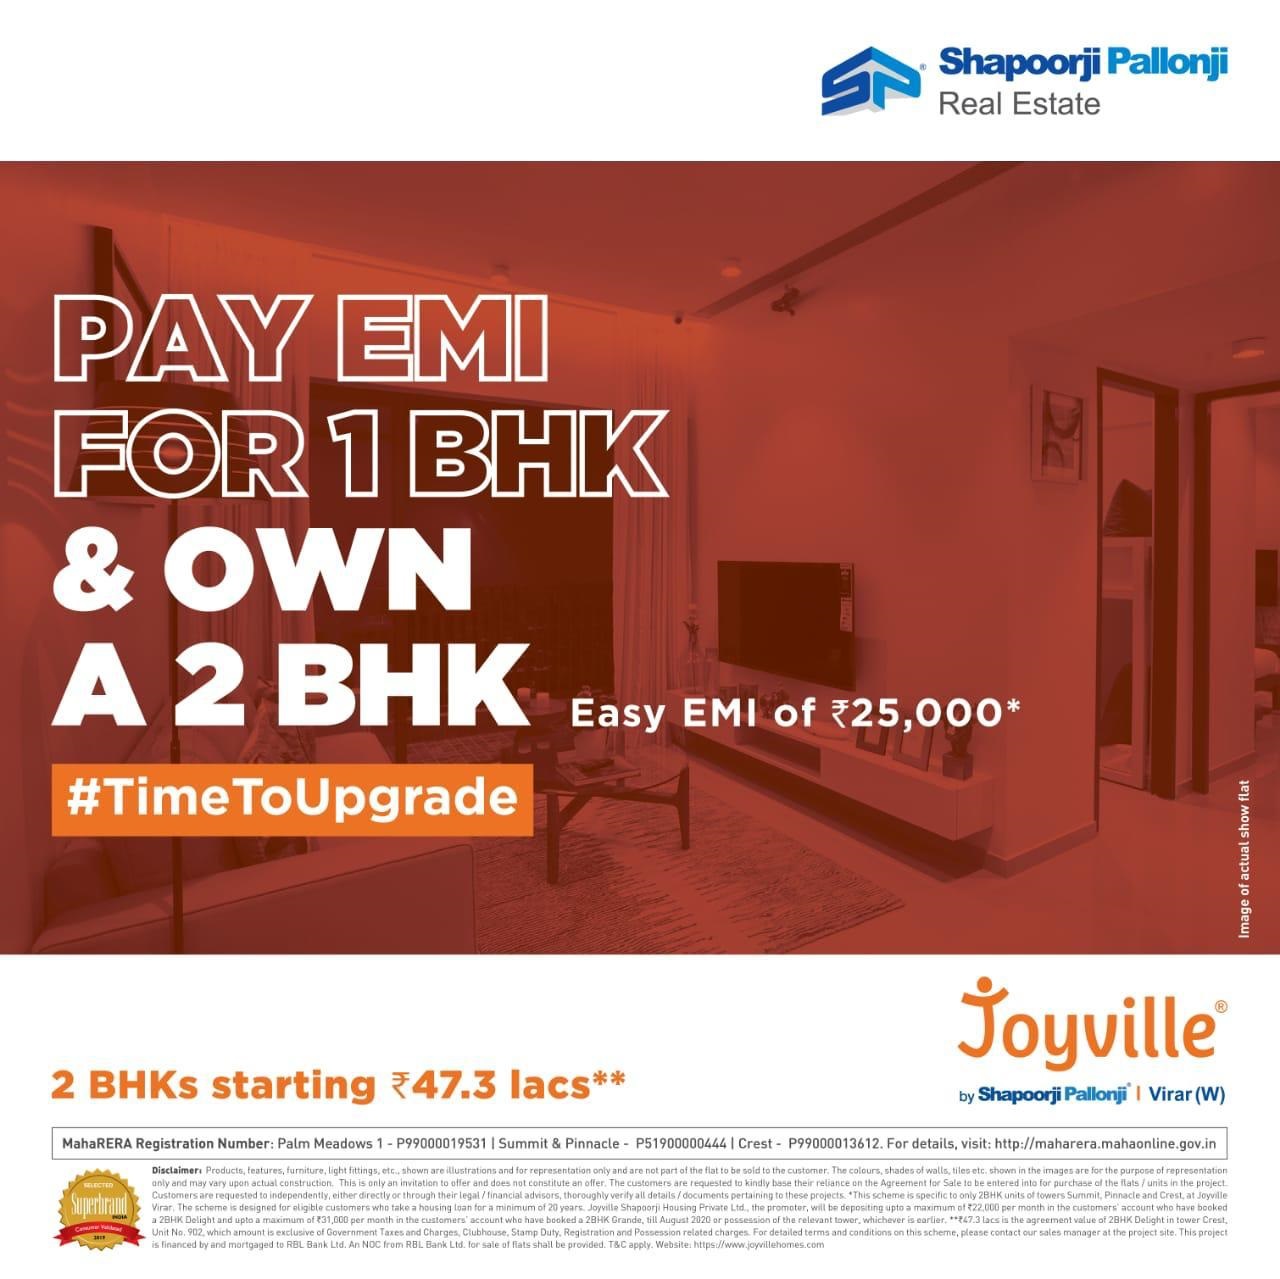 Pay EMI for 1 BHK and own a 2 BHK at Shapoorji Pallonji Joyville in Virar, Mumbai Update